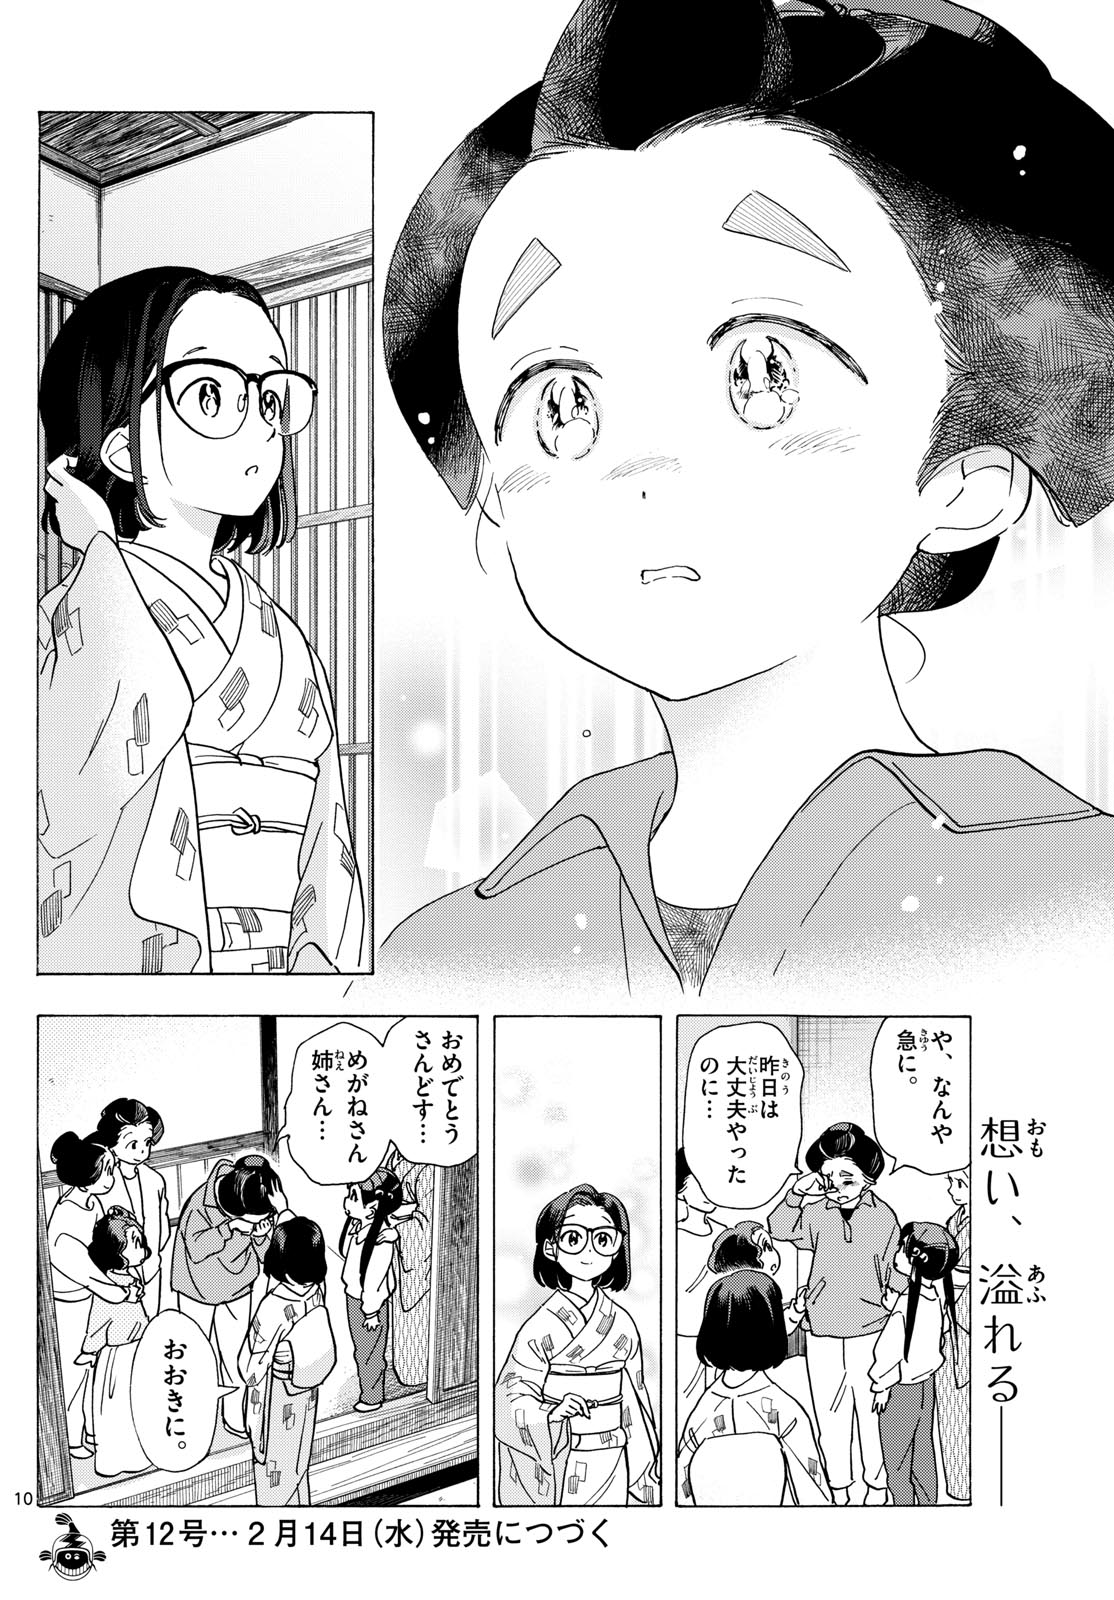 Maiko-san Chi no Makanai-san - Chapter 293 - Page 10